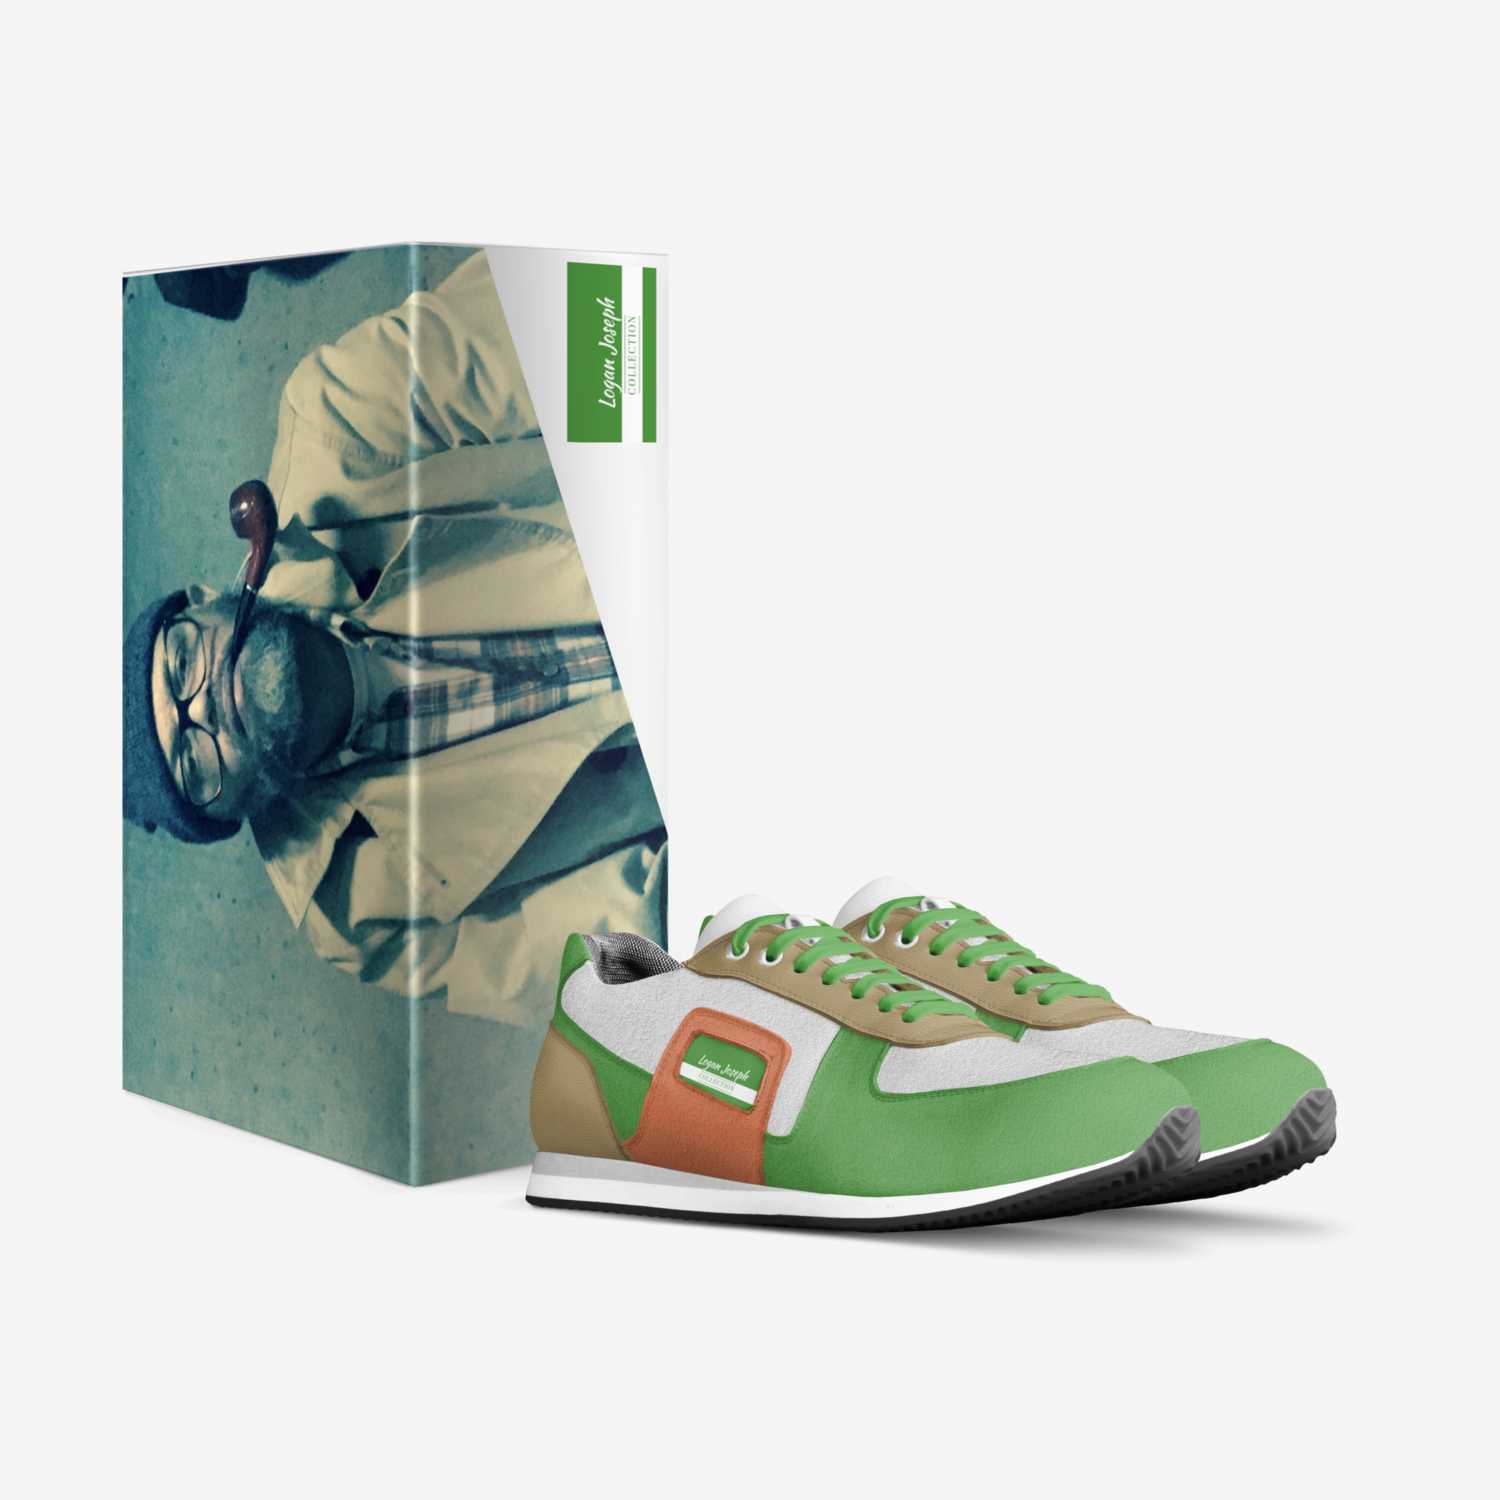 Logan Joseph custom made in Italy shoes by Khalid Salaam | Box view